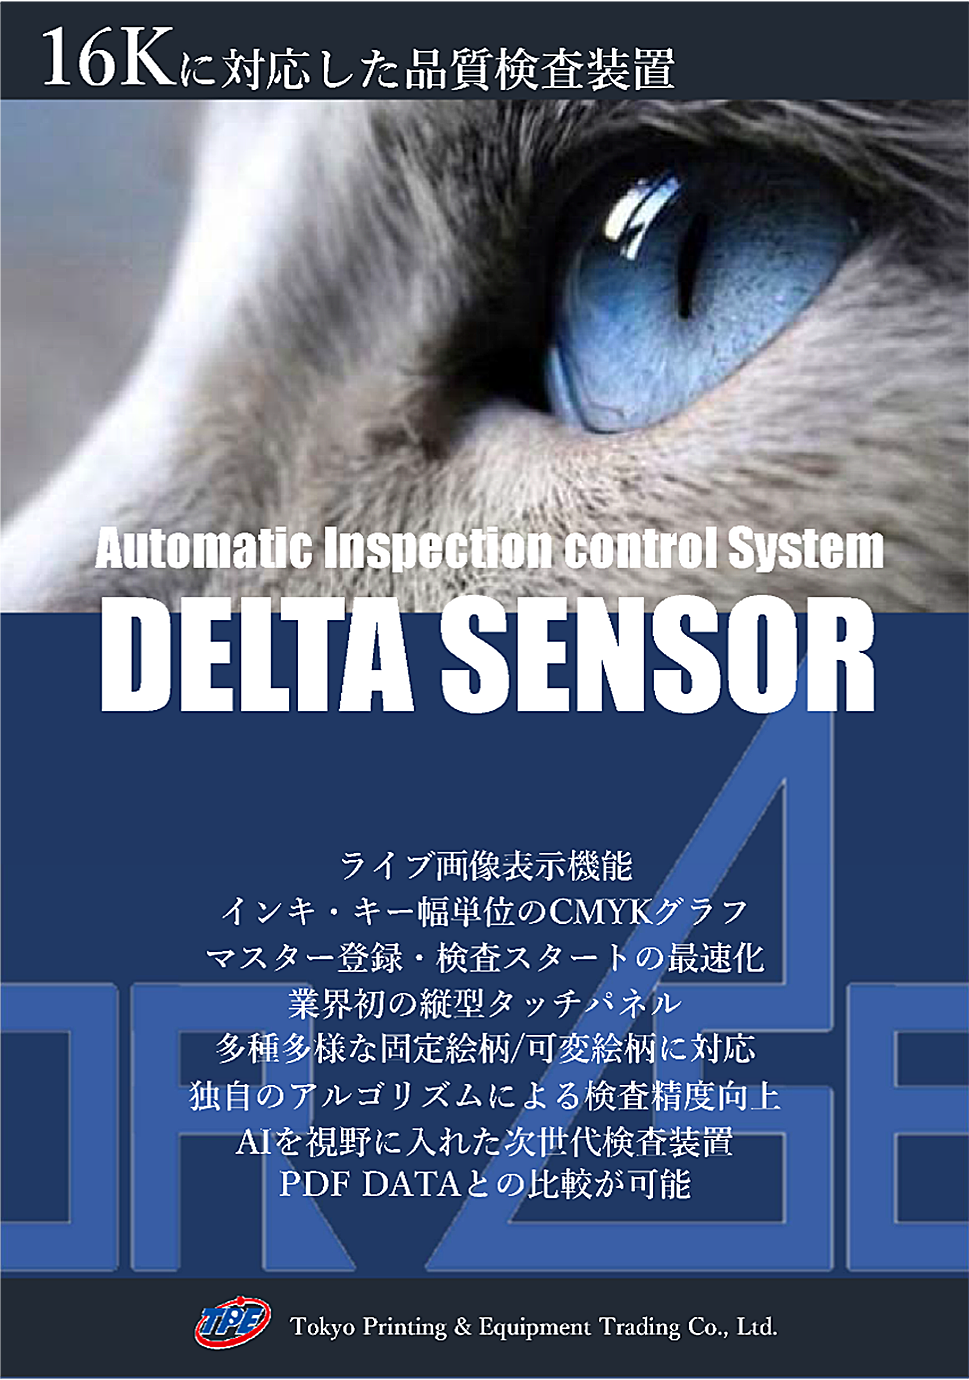 Delta Sensorのイメージ画像